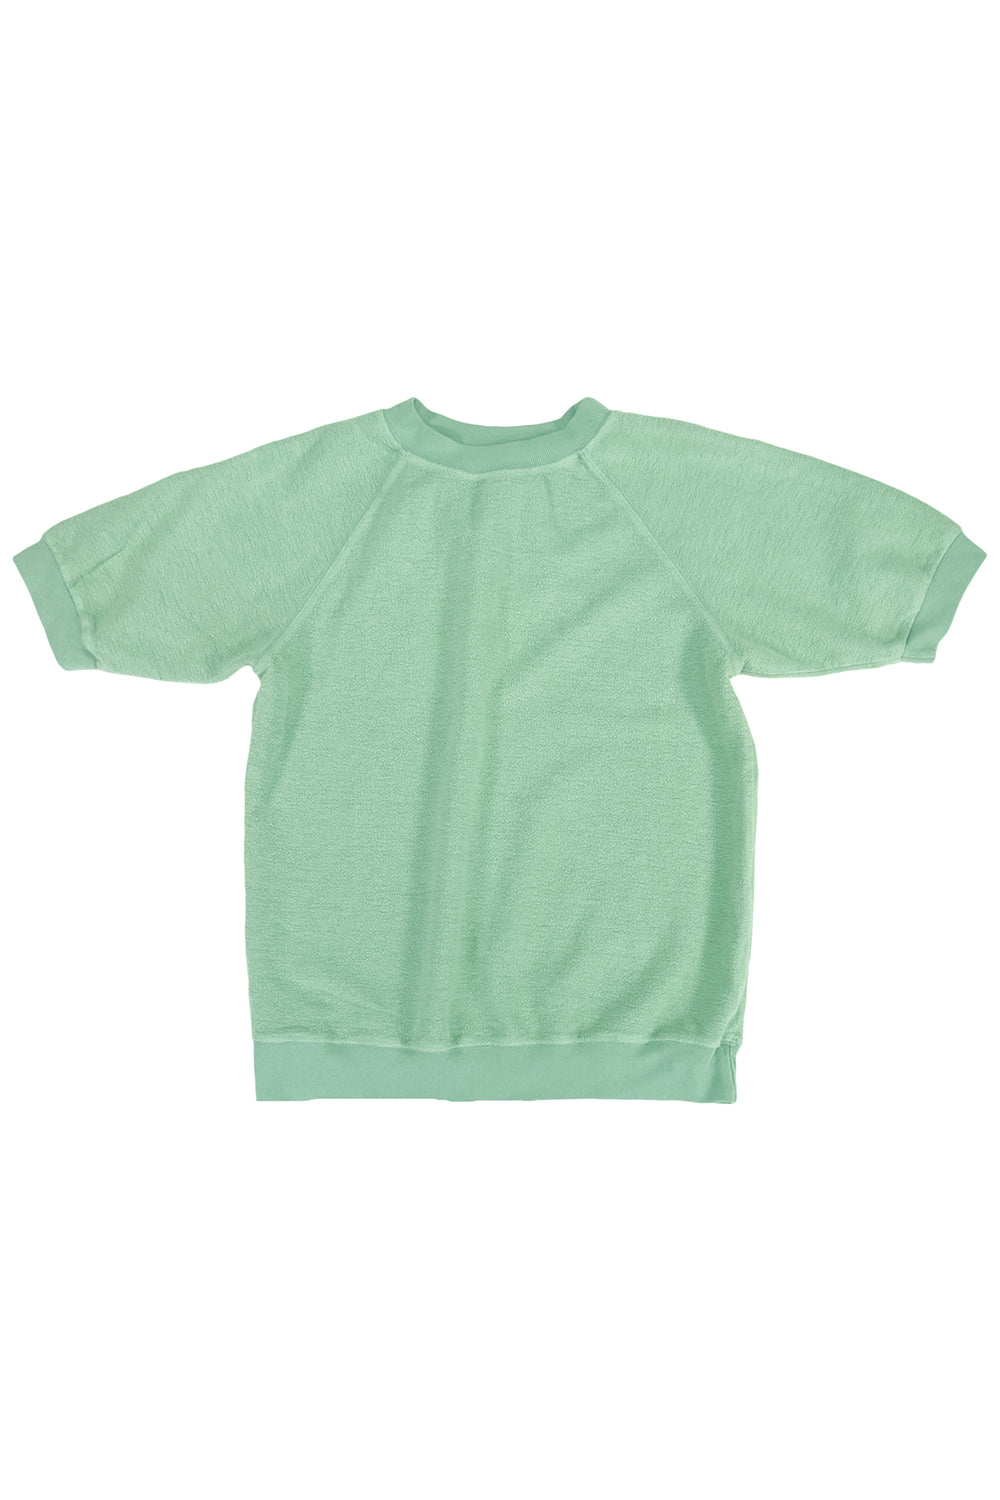 Short Sleeve Raglan Sherpa Sweatshirt | Jungmaven Hemp Clothing & Accessories / Color: Sage Green